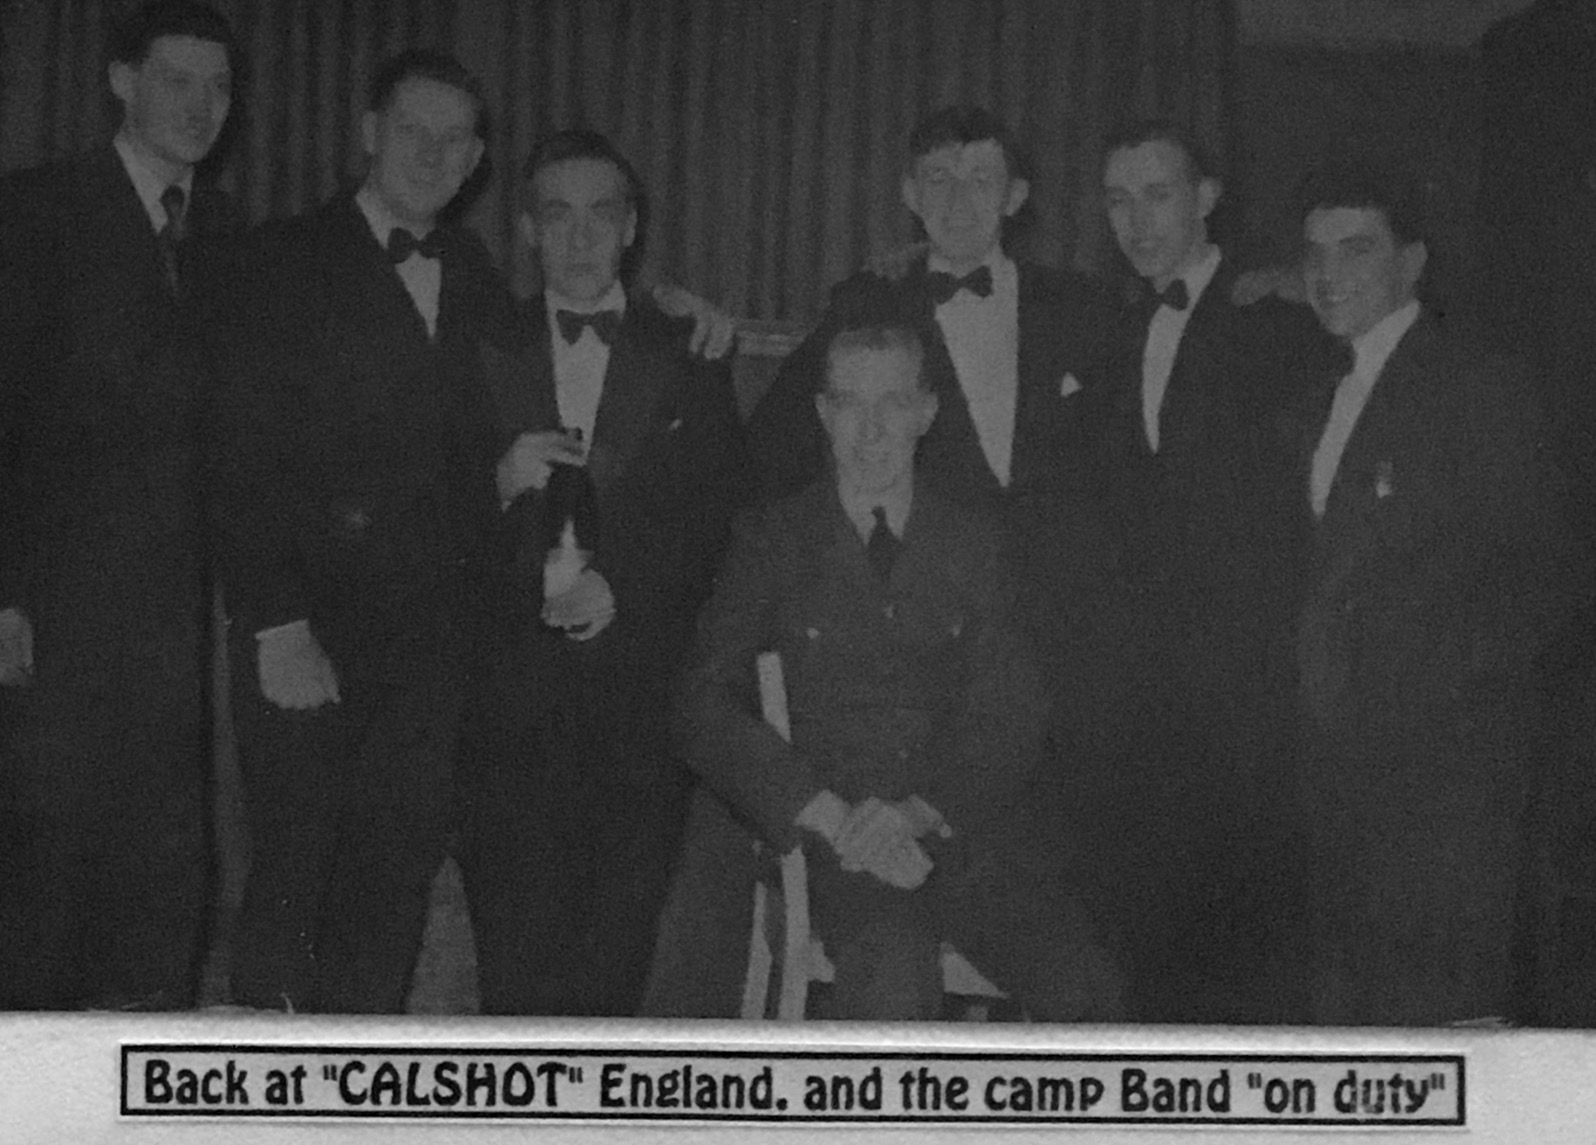 Formed a dance band on RAF camp Calshot Southampton 1952/5.